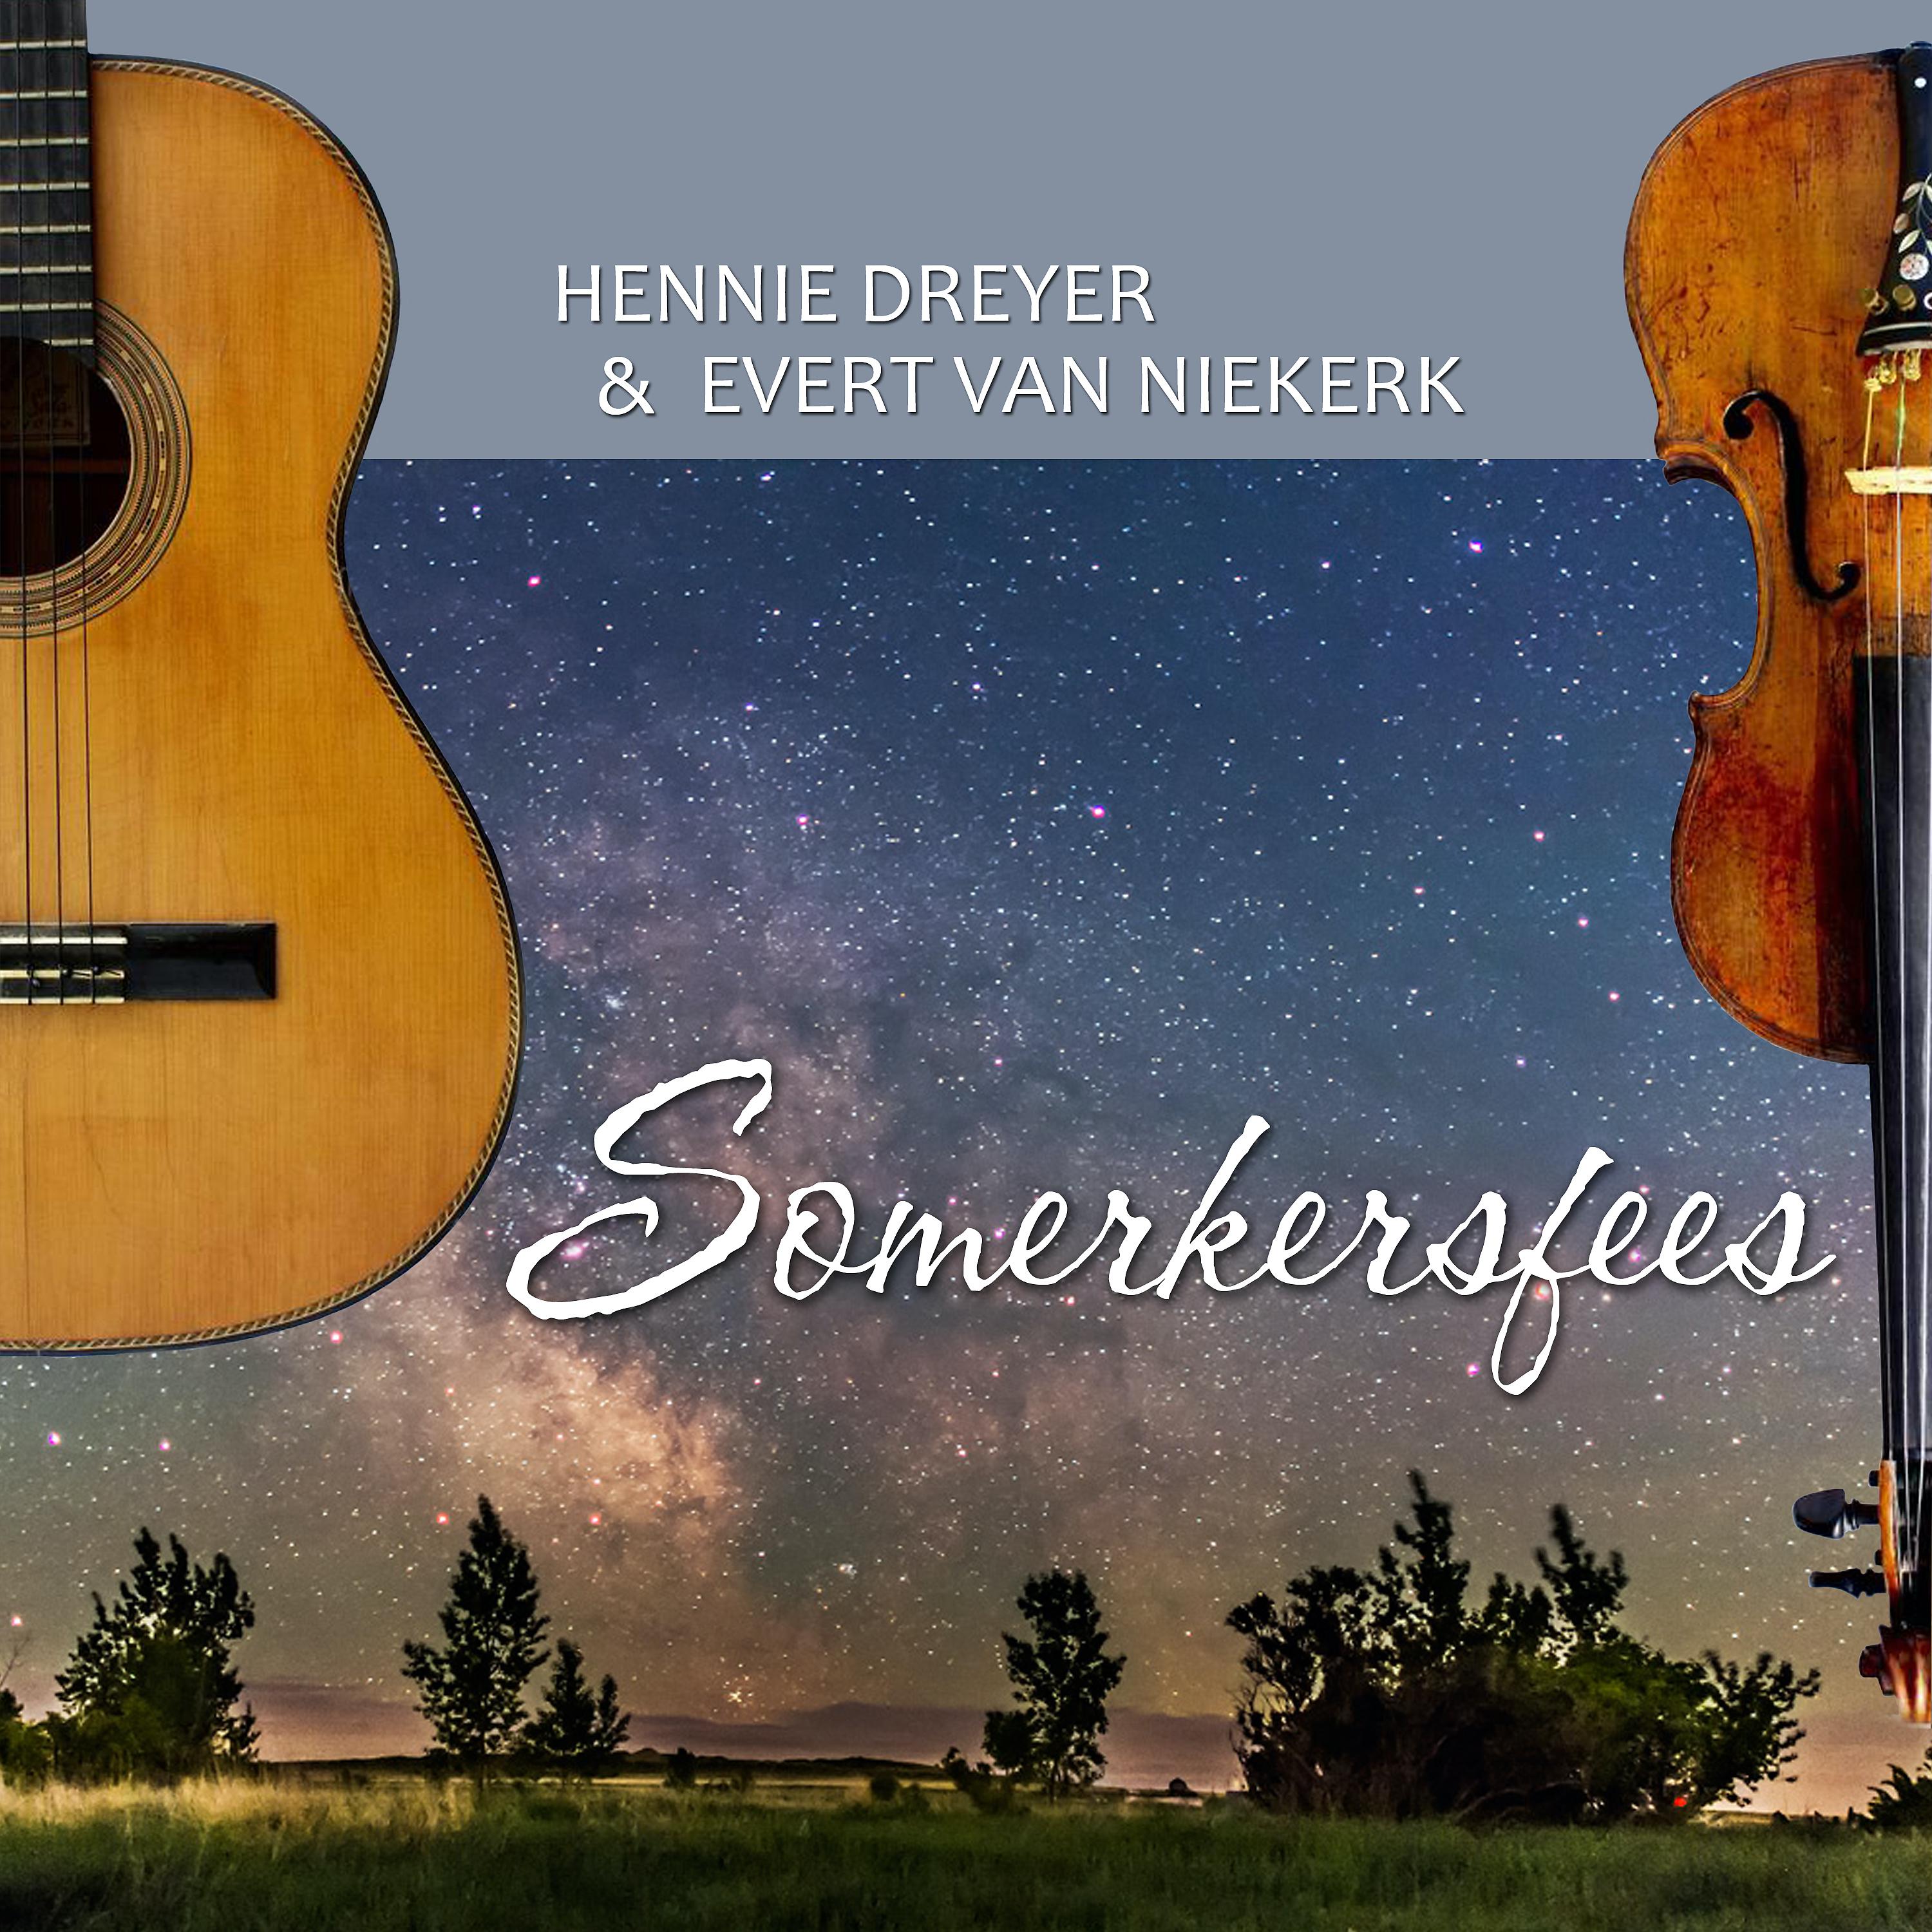 Постер альбома Somerkersfees